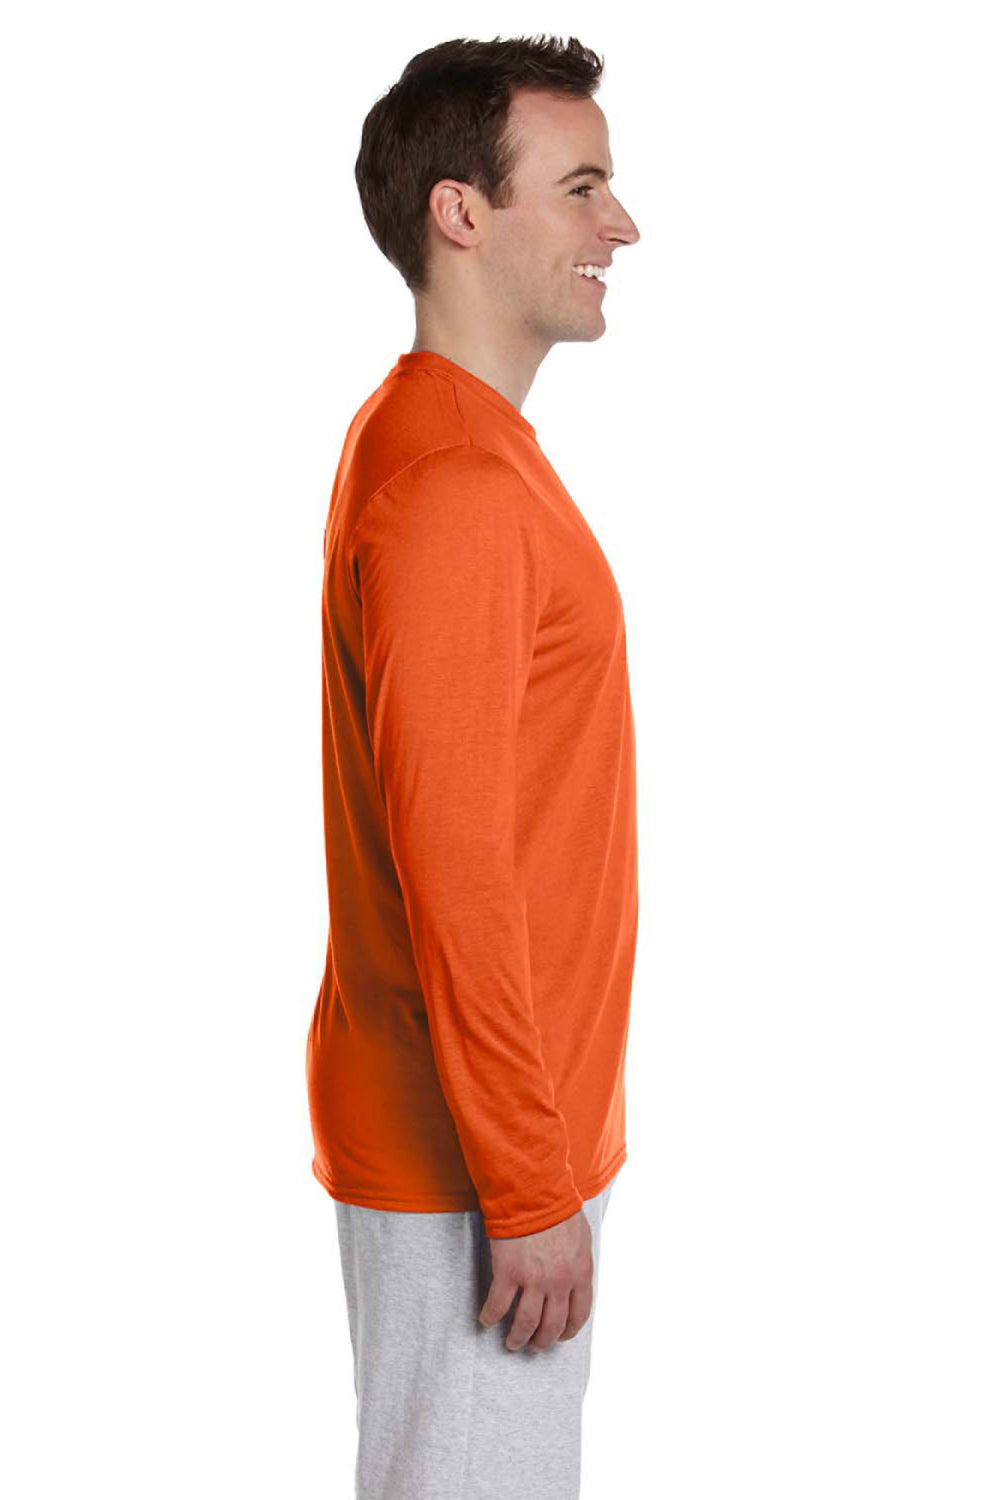 Gildan G424 Mens Performance Jersey Moisture Wicking Long Sleeve Crewneck T-Shirt Orange Side